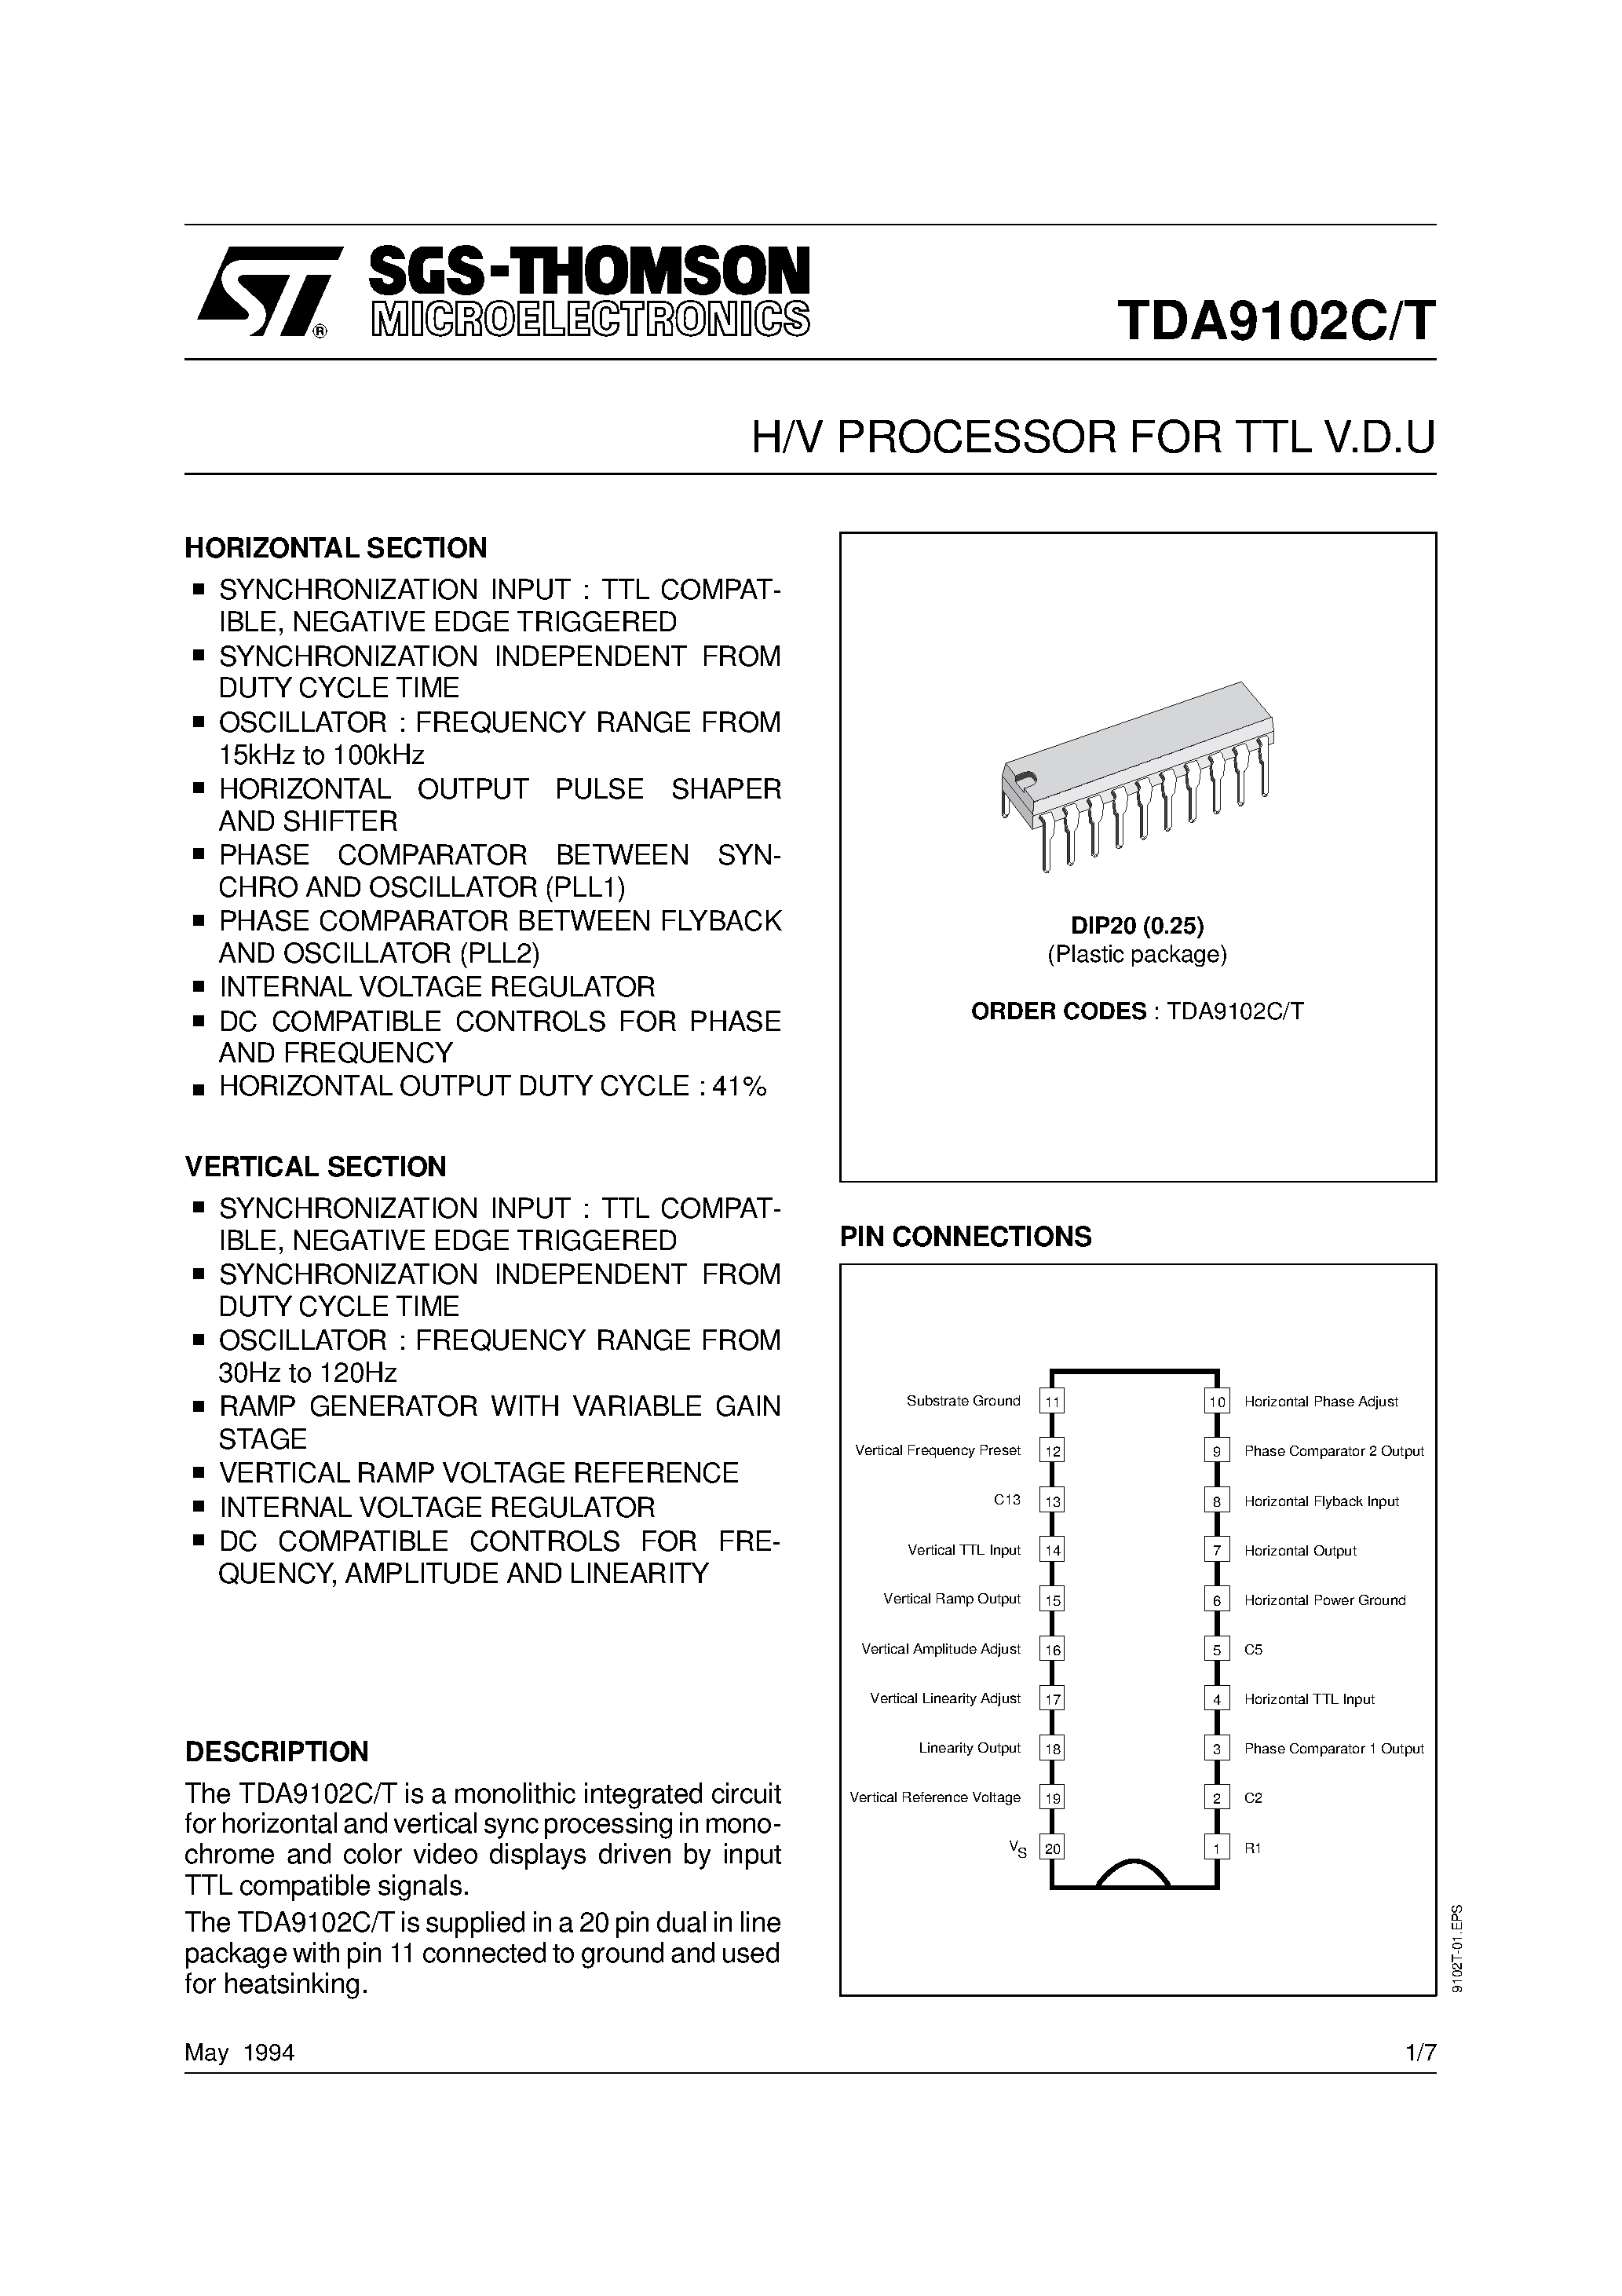 Даташит TDA9102CT-H/V PROCESSOR FOR TTL V.D.U страница 1